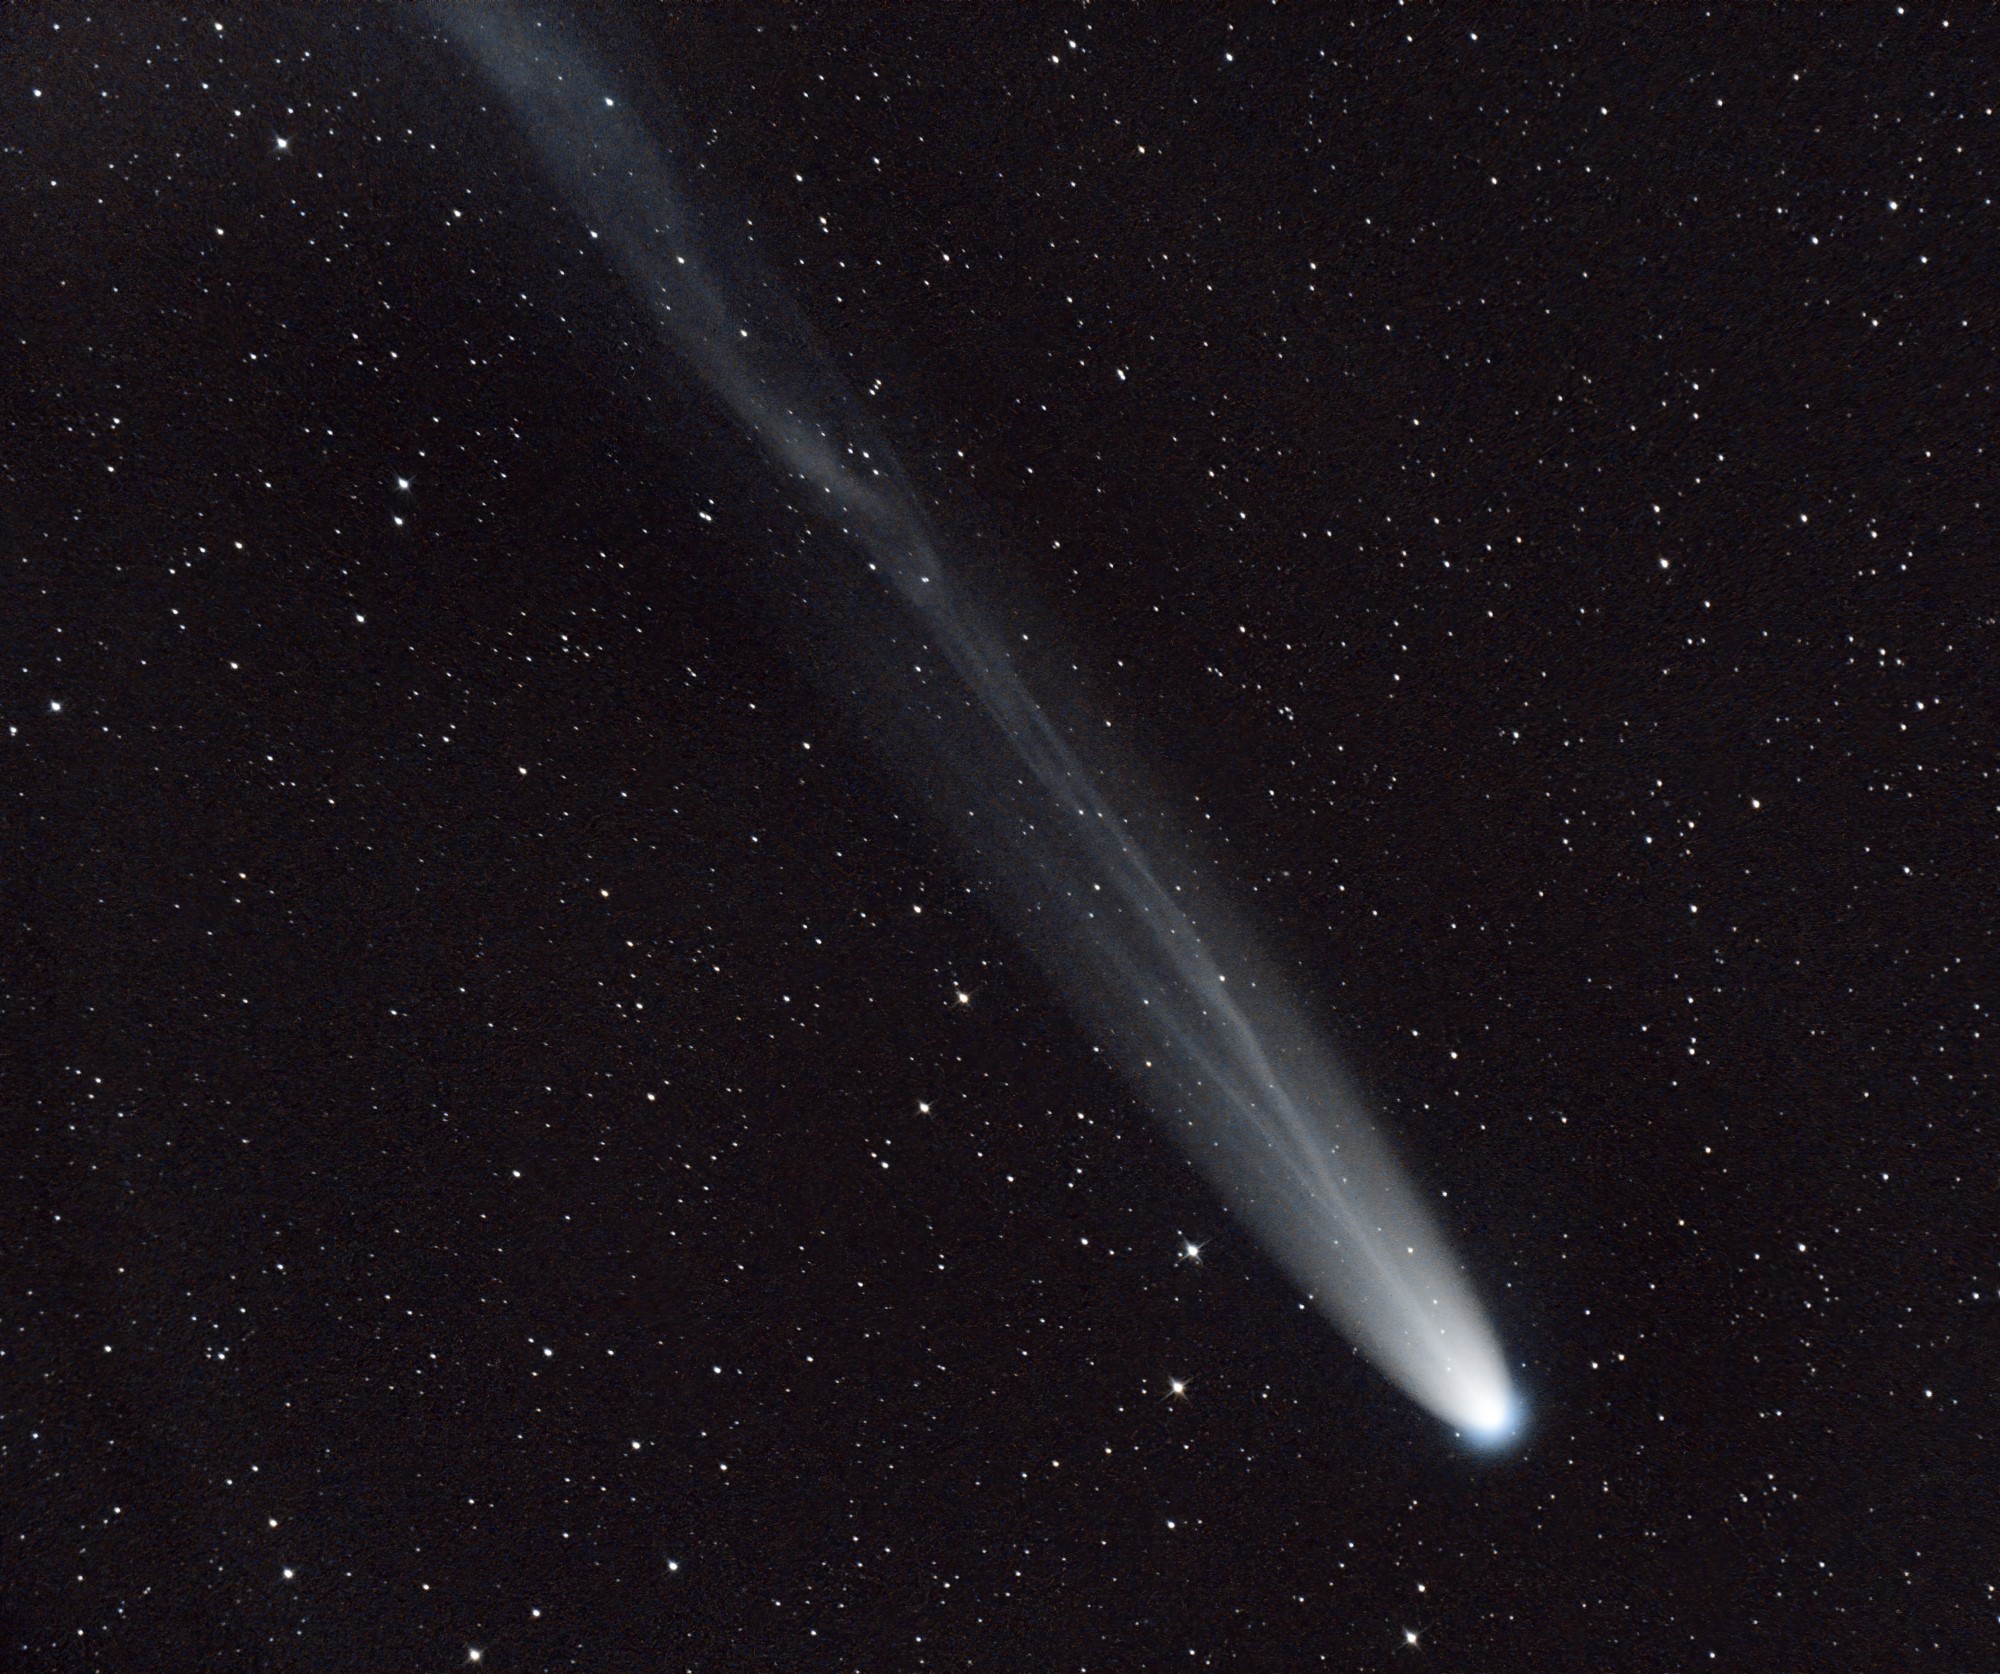 A view of Comet Leonard as seen over Australia.